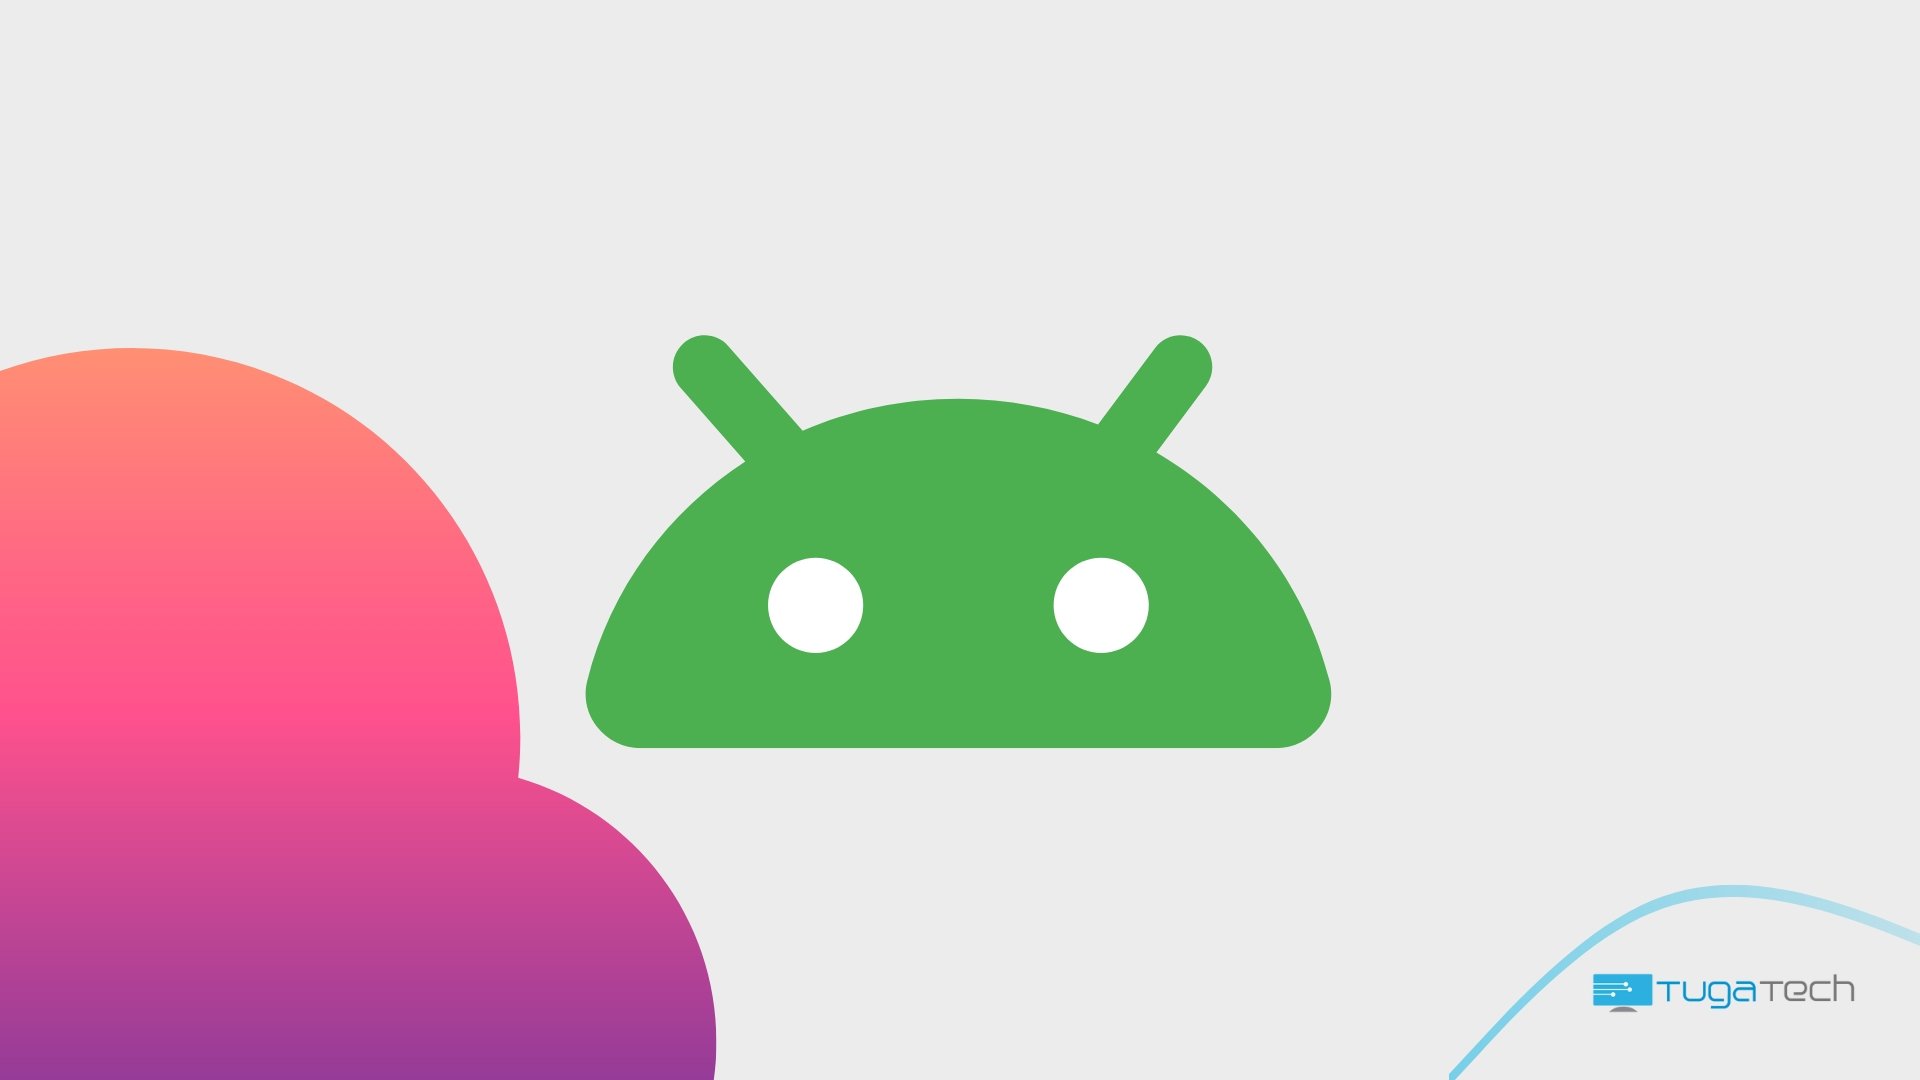 Logo do Android